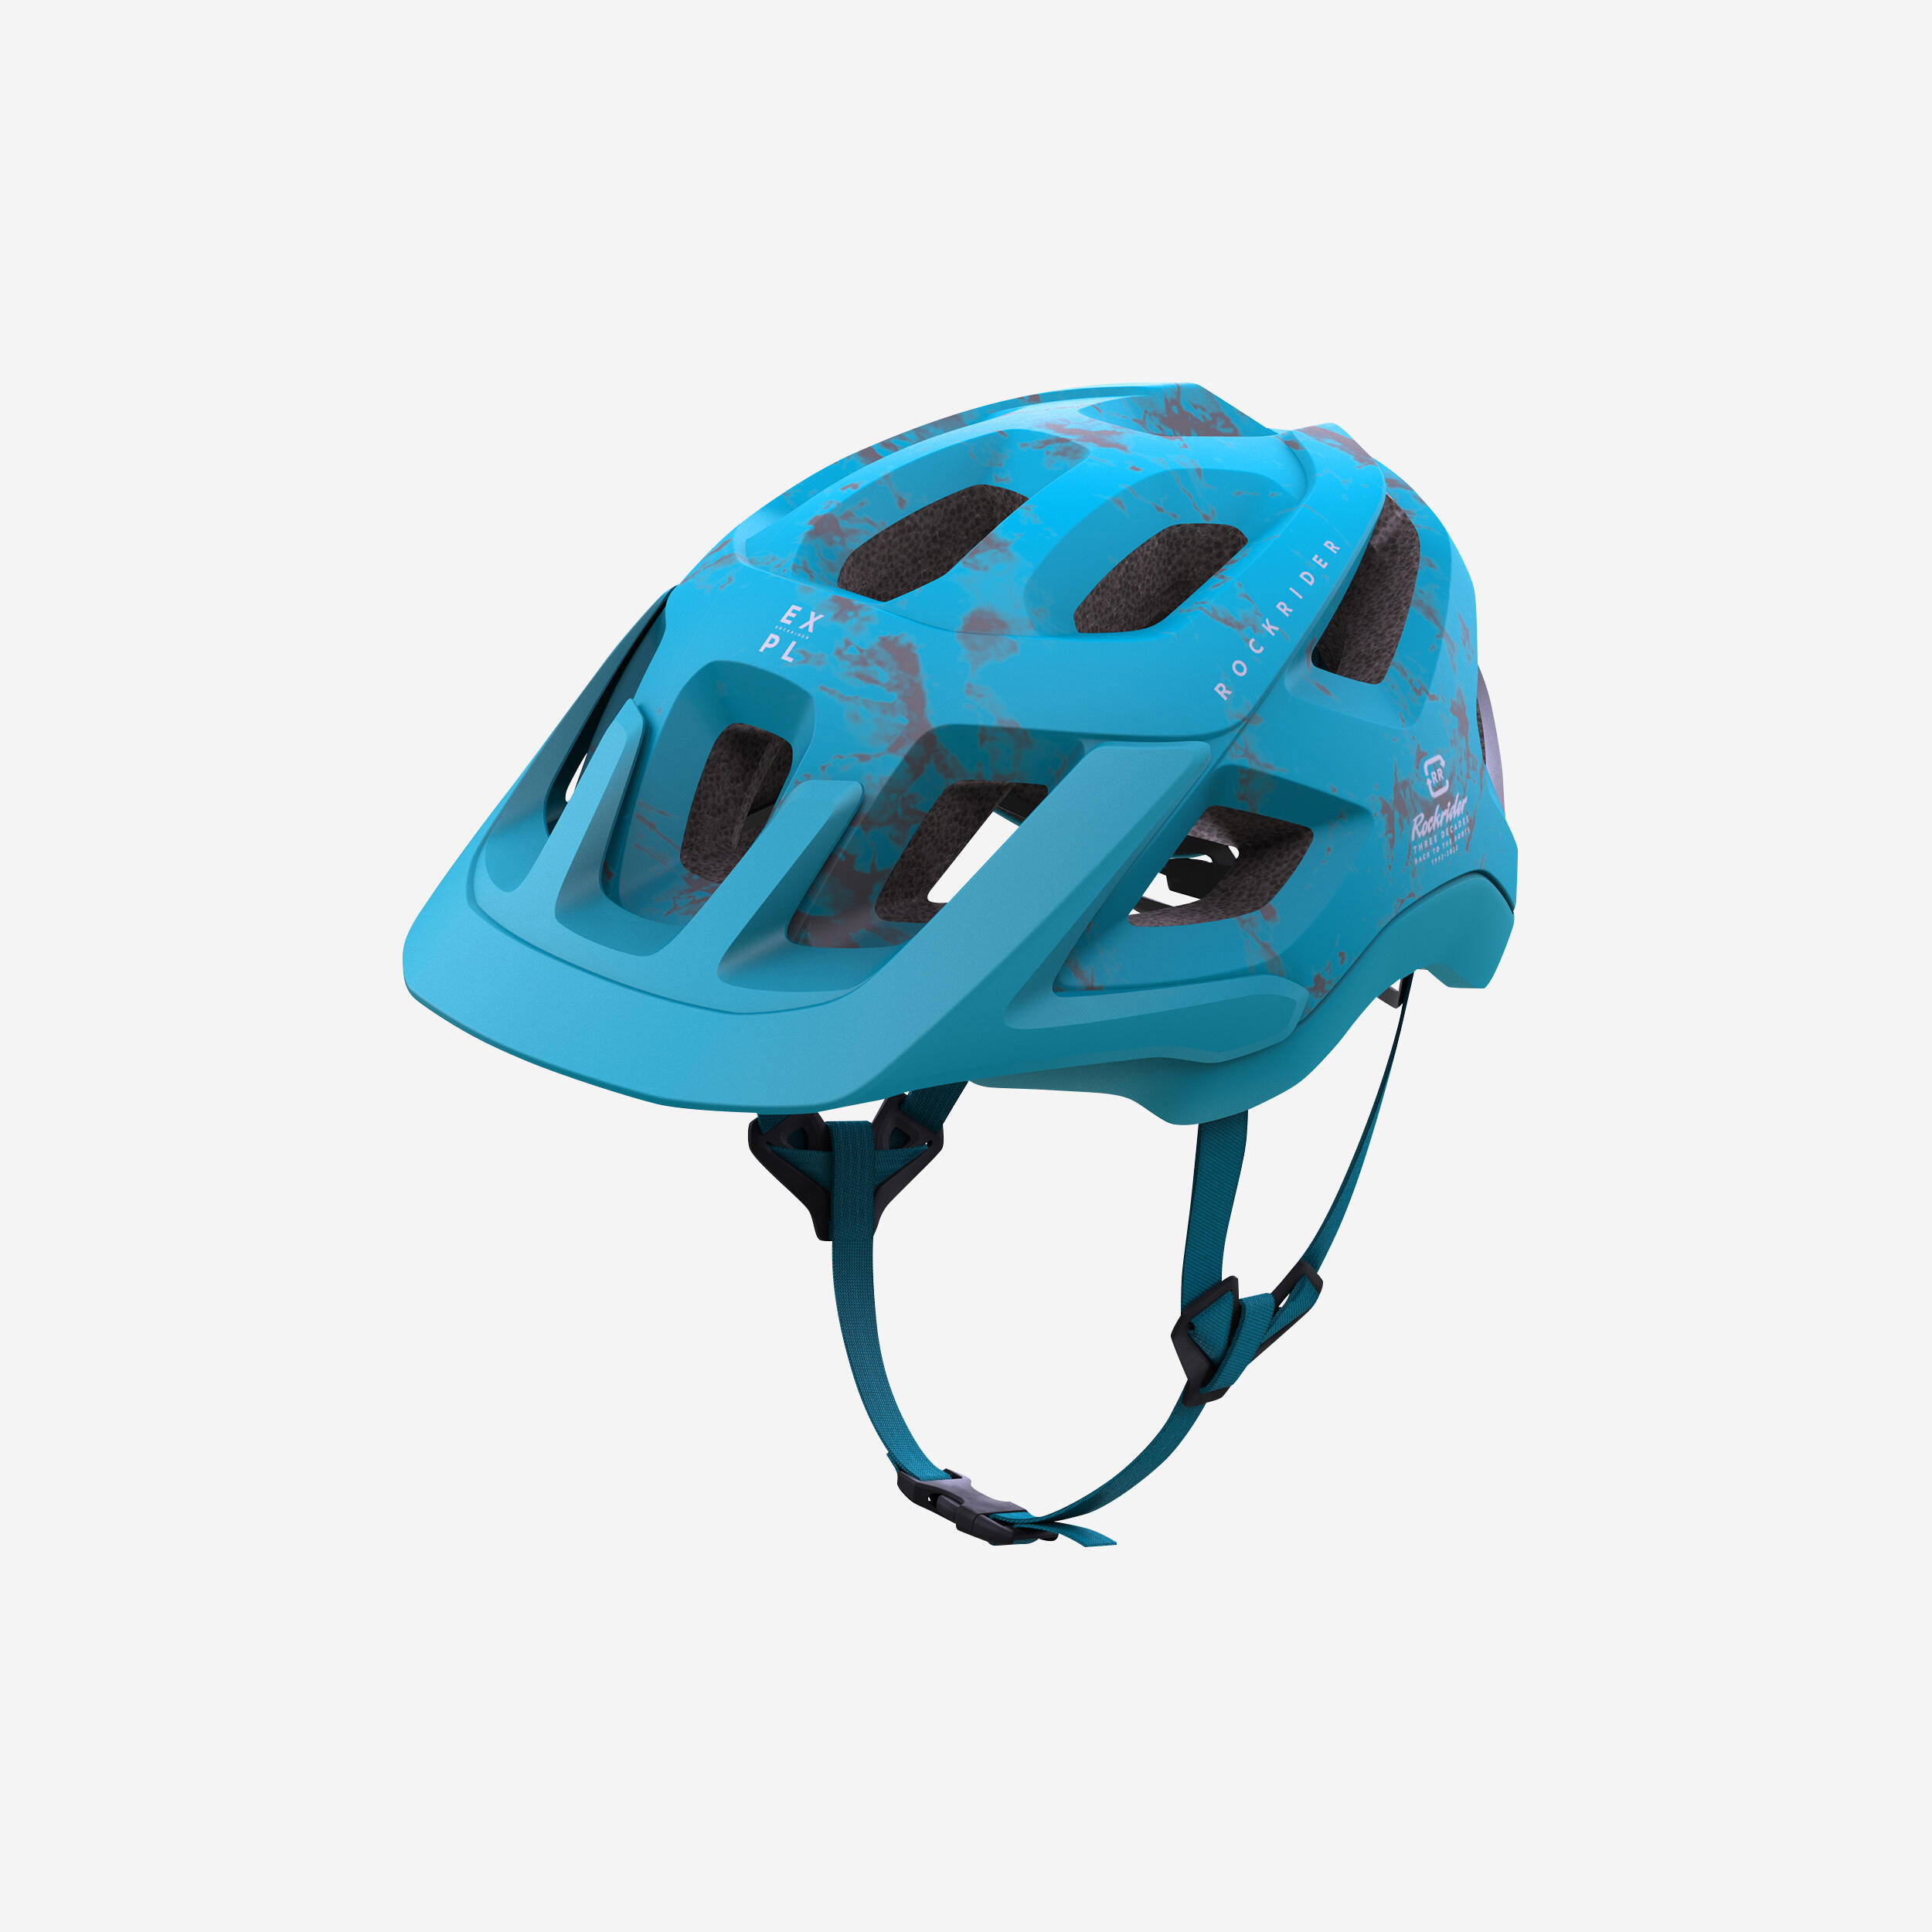 ROCKRIDER Mountain Bike Helmet EXPL 500 - Turquoise